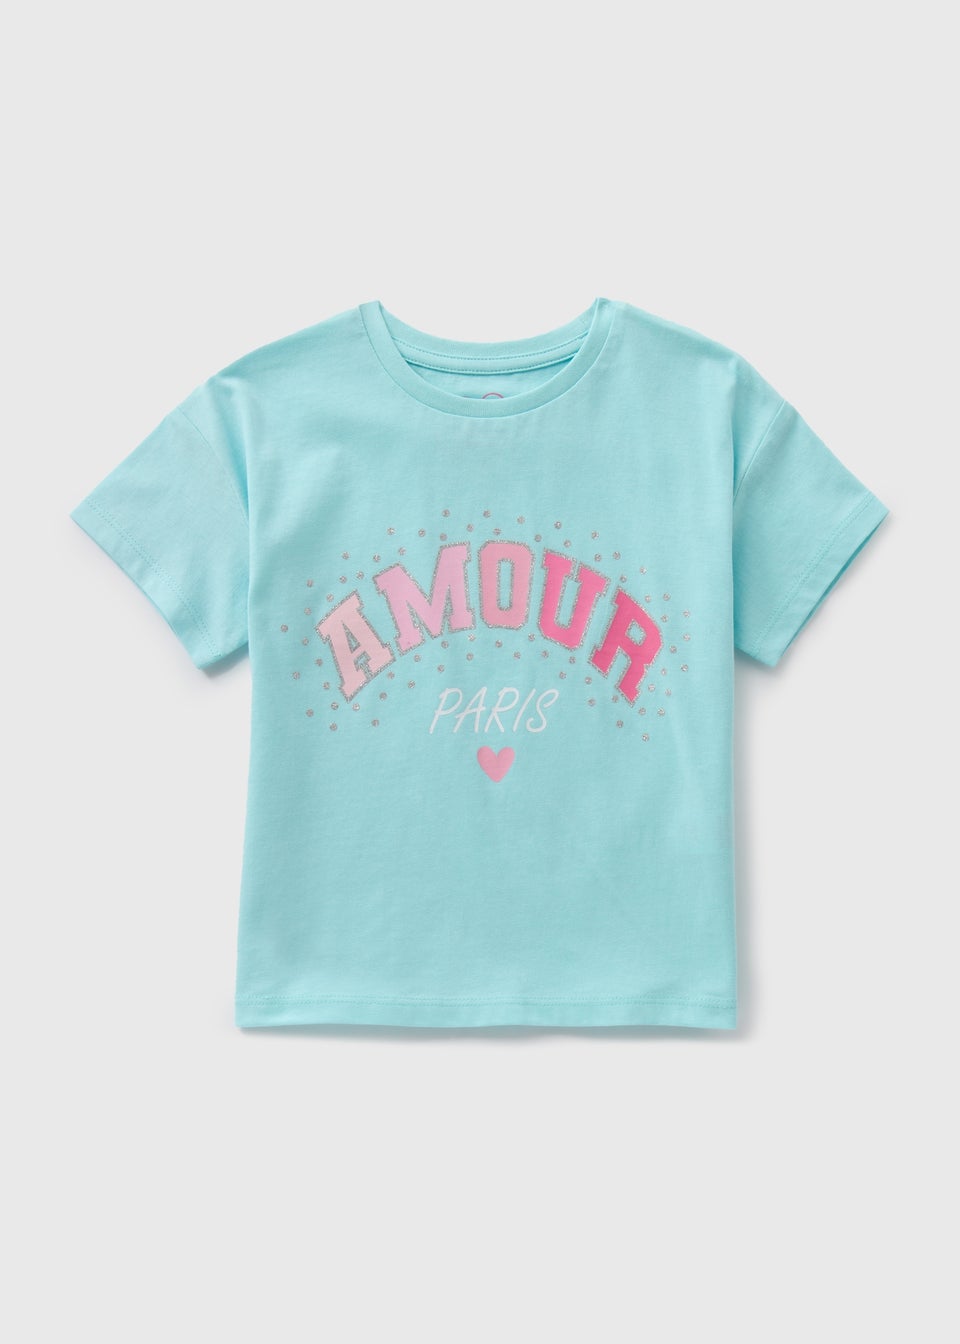 Girls Aqua Amour Paris T-Shirt (1-7yrs)